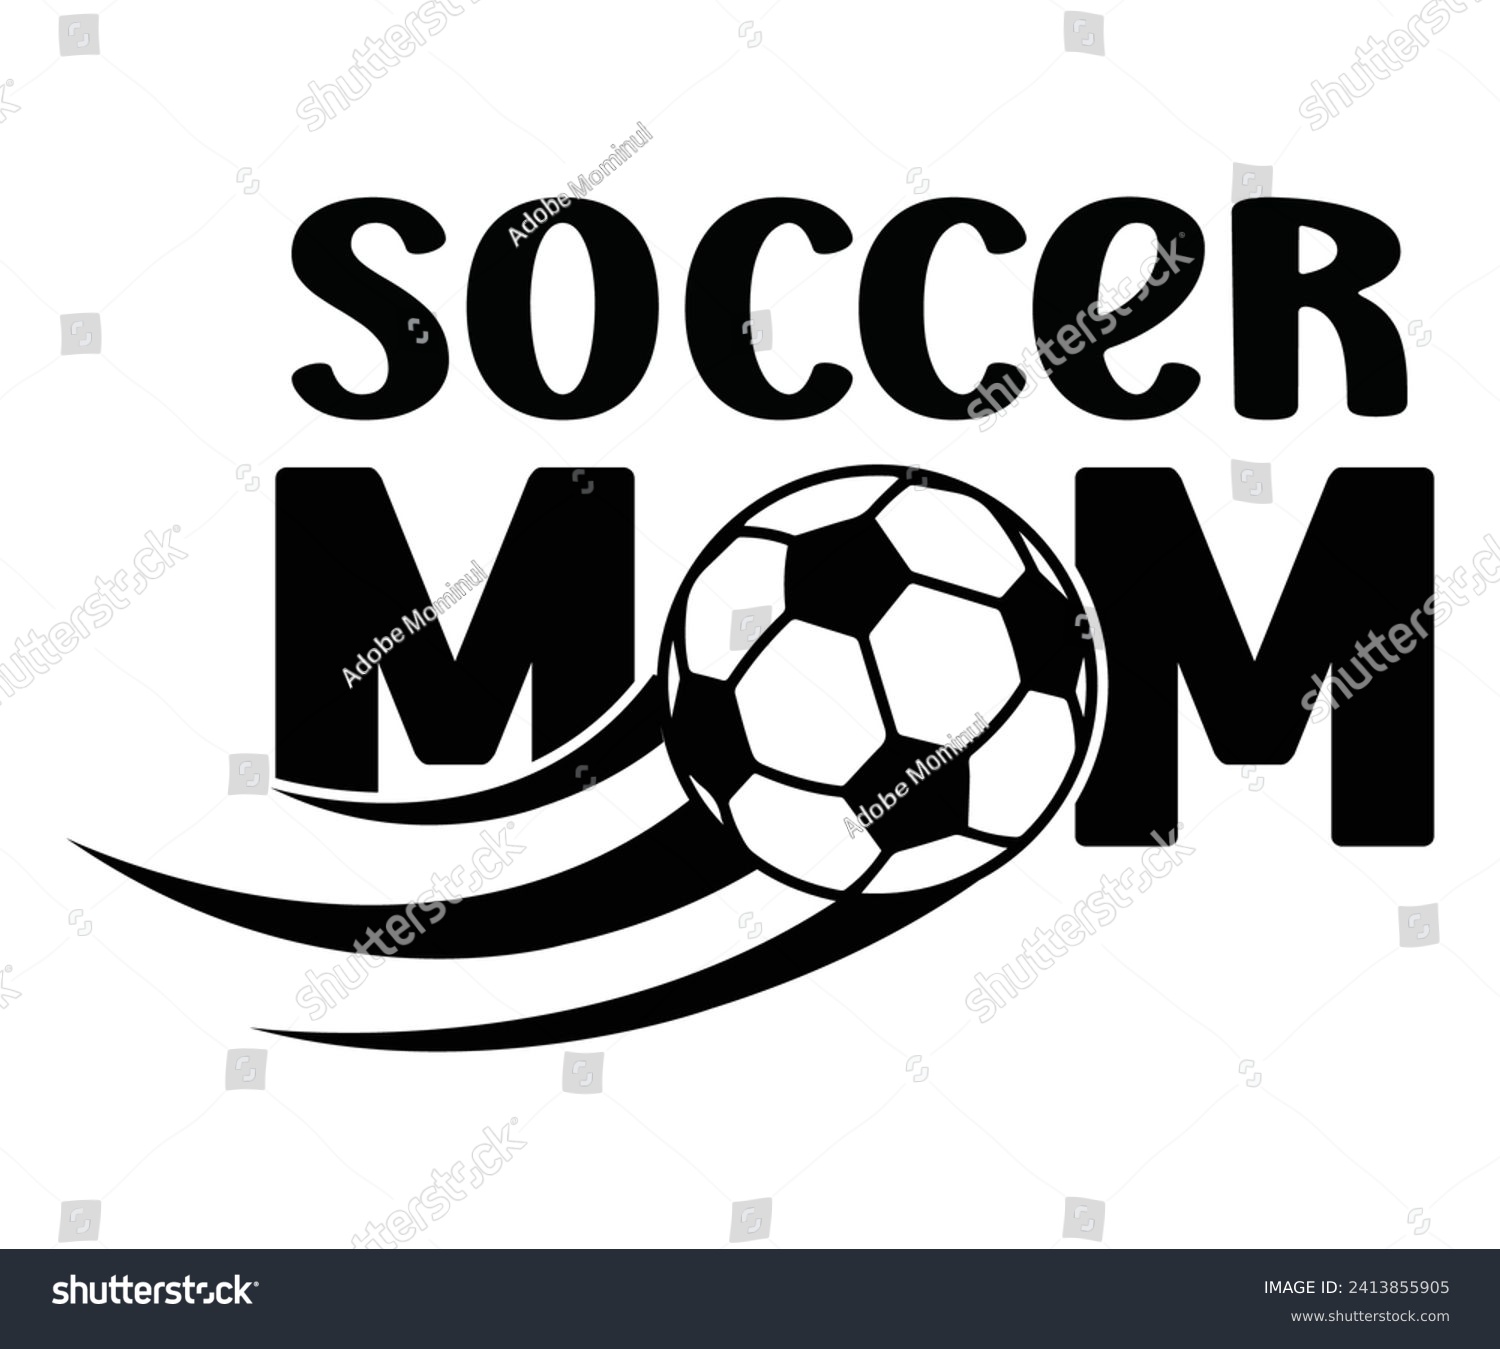 SVG of Soccer Mom Svg,Soccer Quote Svg,Retro,Soccer Mom Shirt,Funny Shirt,Soccar Player Shirt,Game Day Shirt,Gift For Soccer,Dad of Soccer,Soccer Mascot,Soccer Football,Sport Design Svg,Groovy Cut File, svg